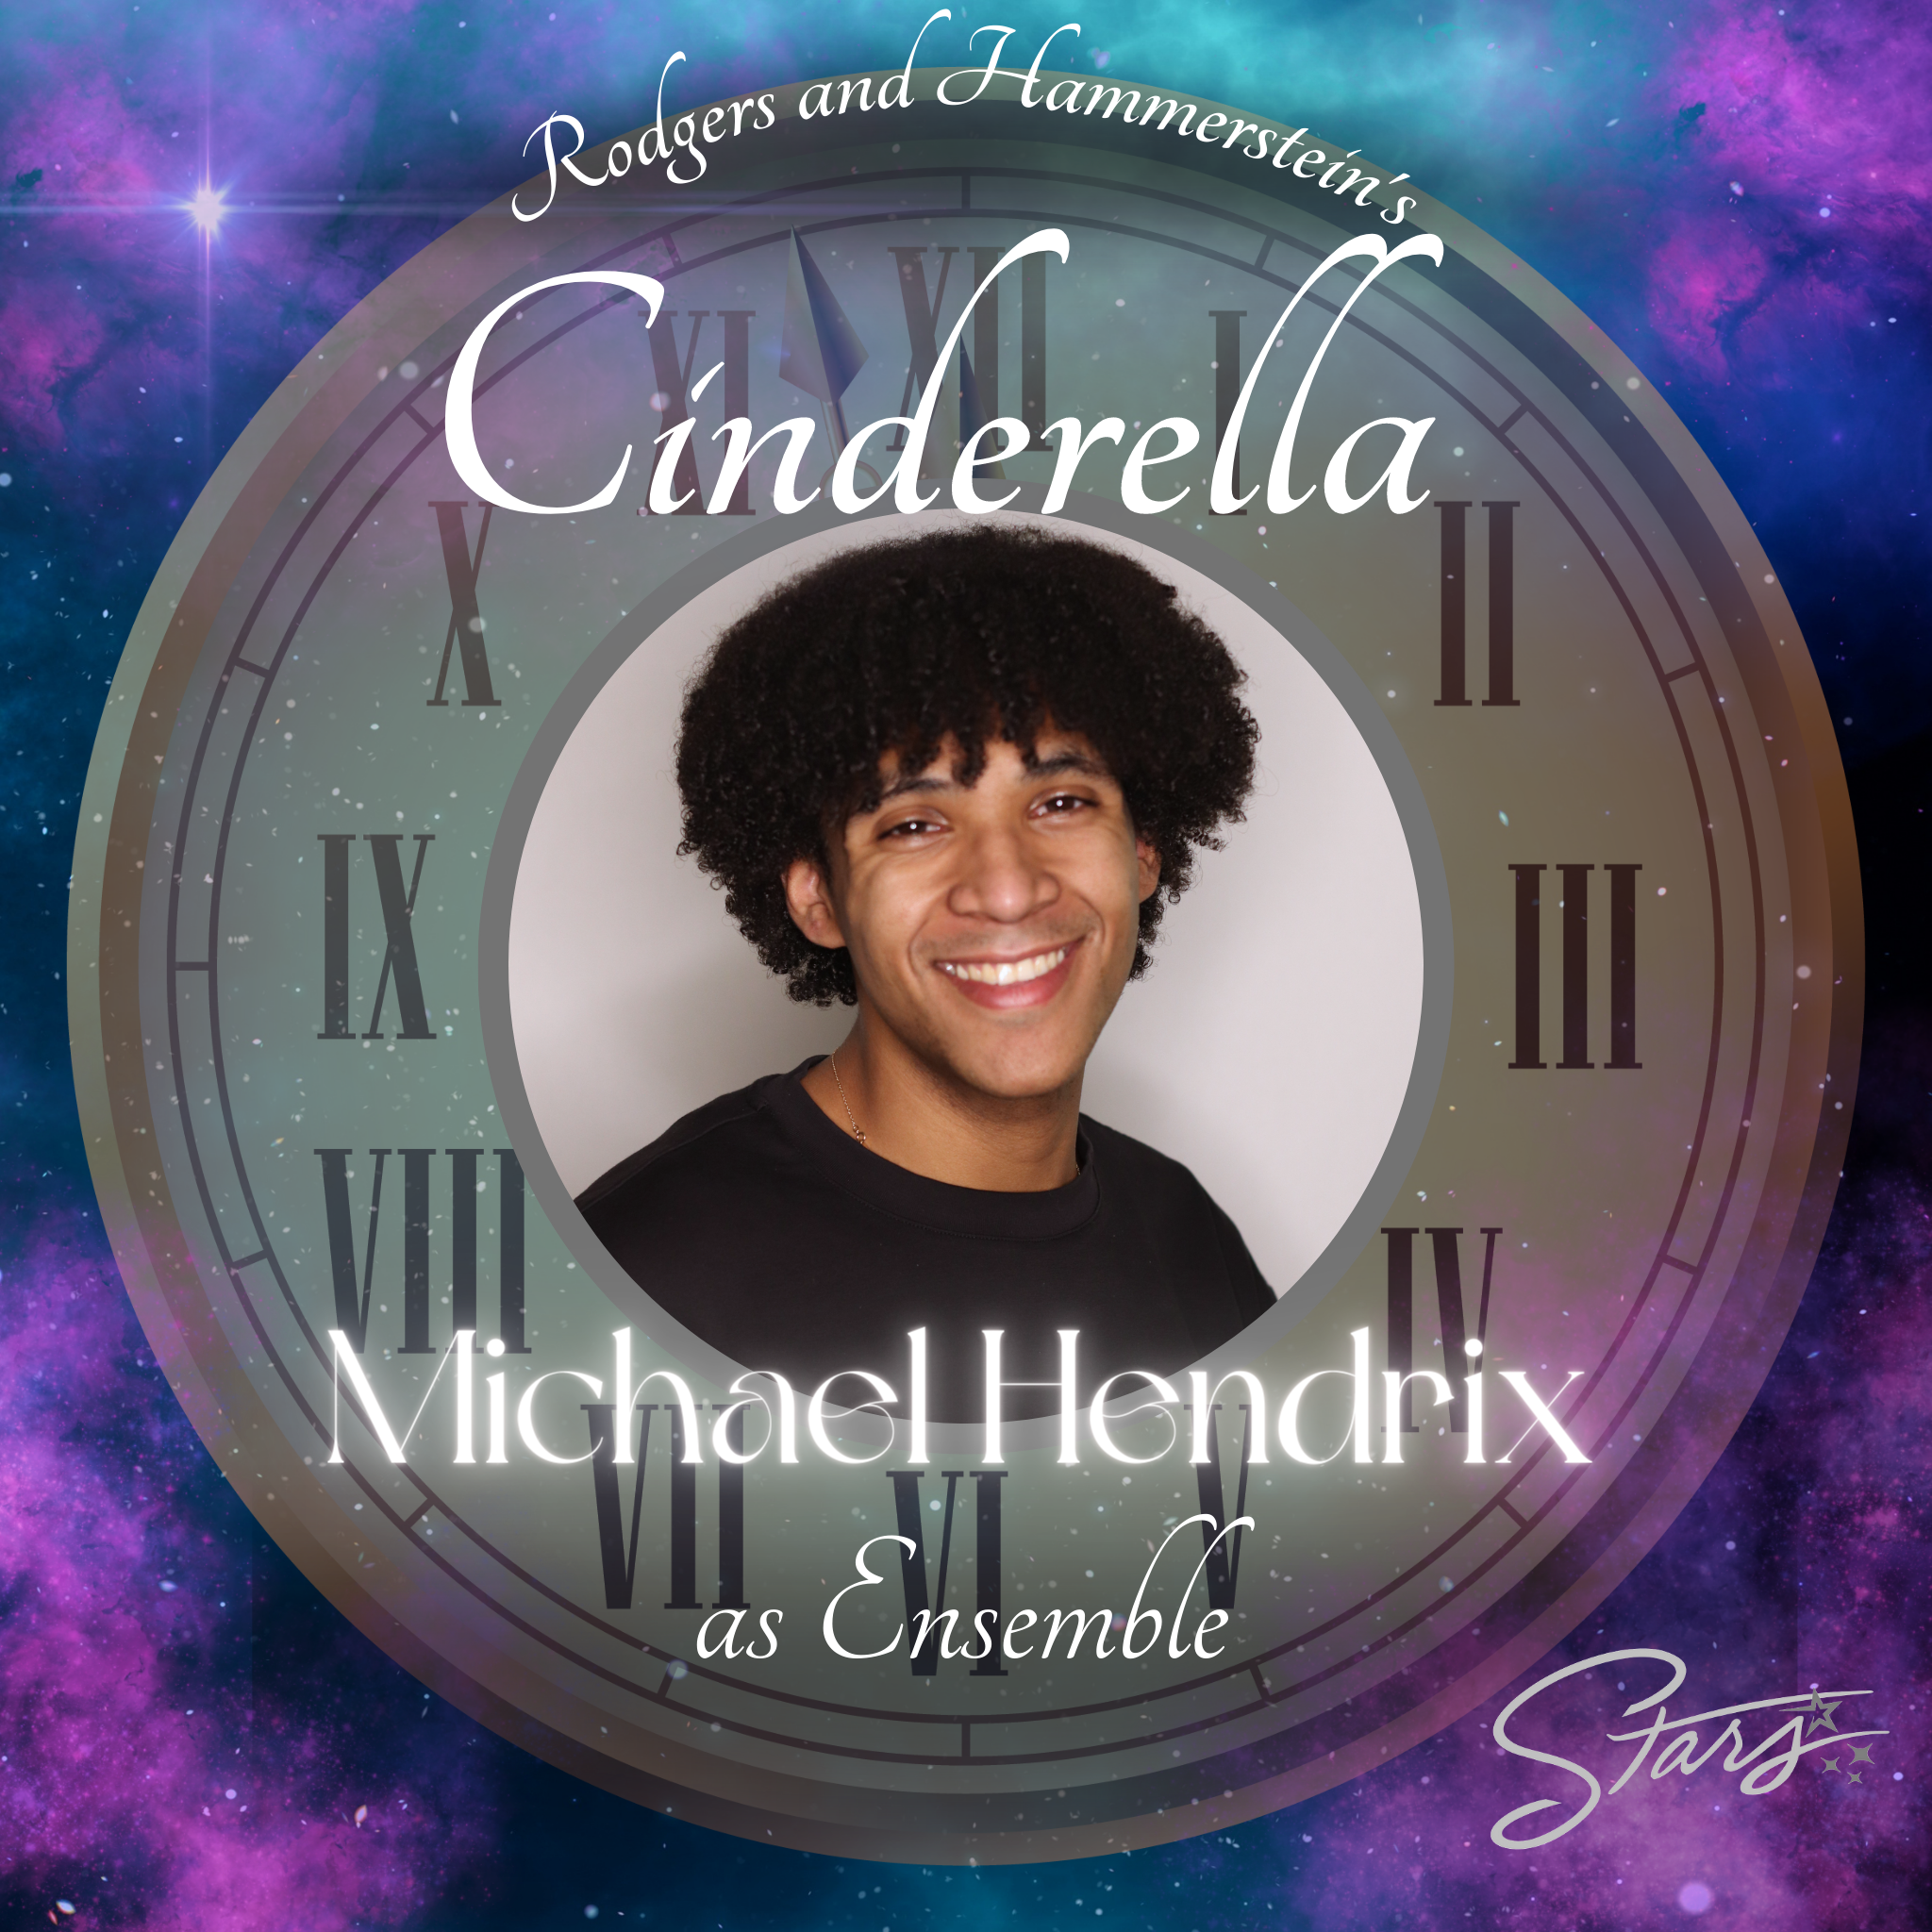 Michael Hendrix as Ensemble in Cinderella